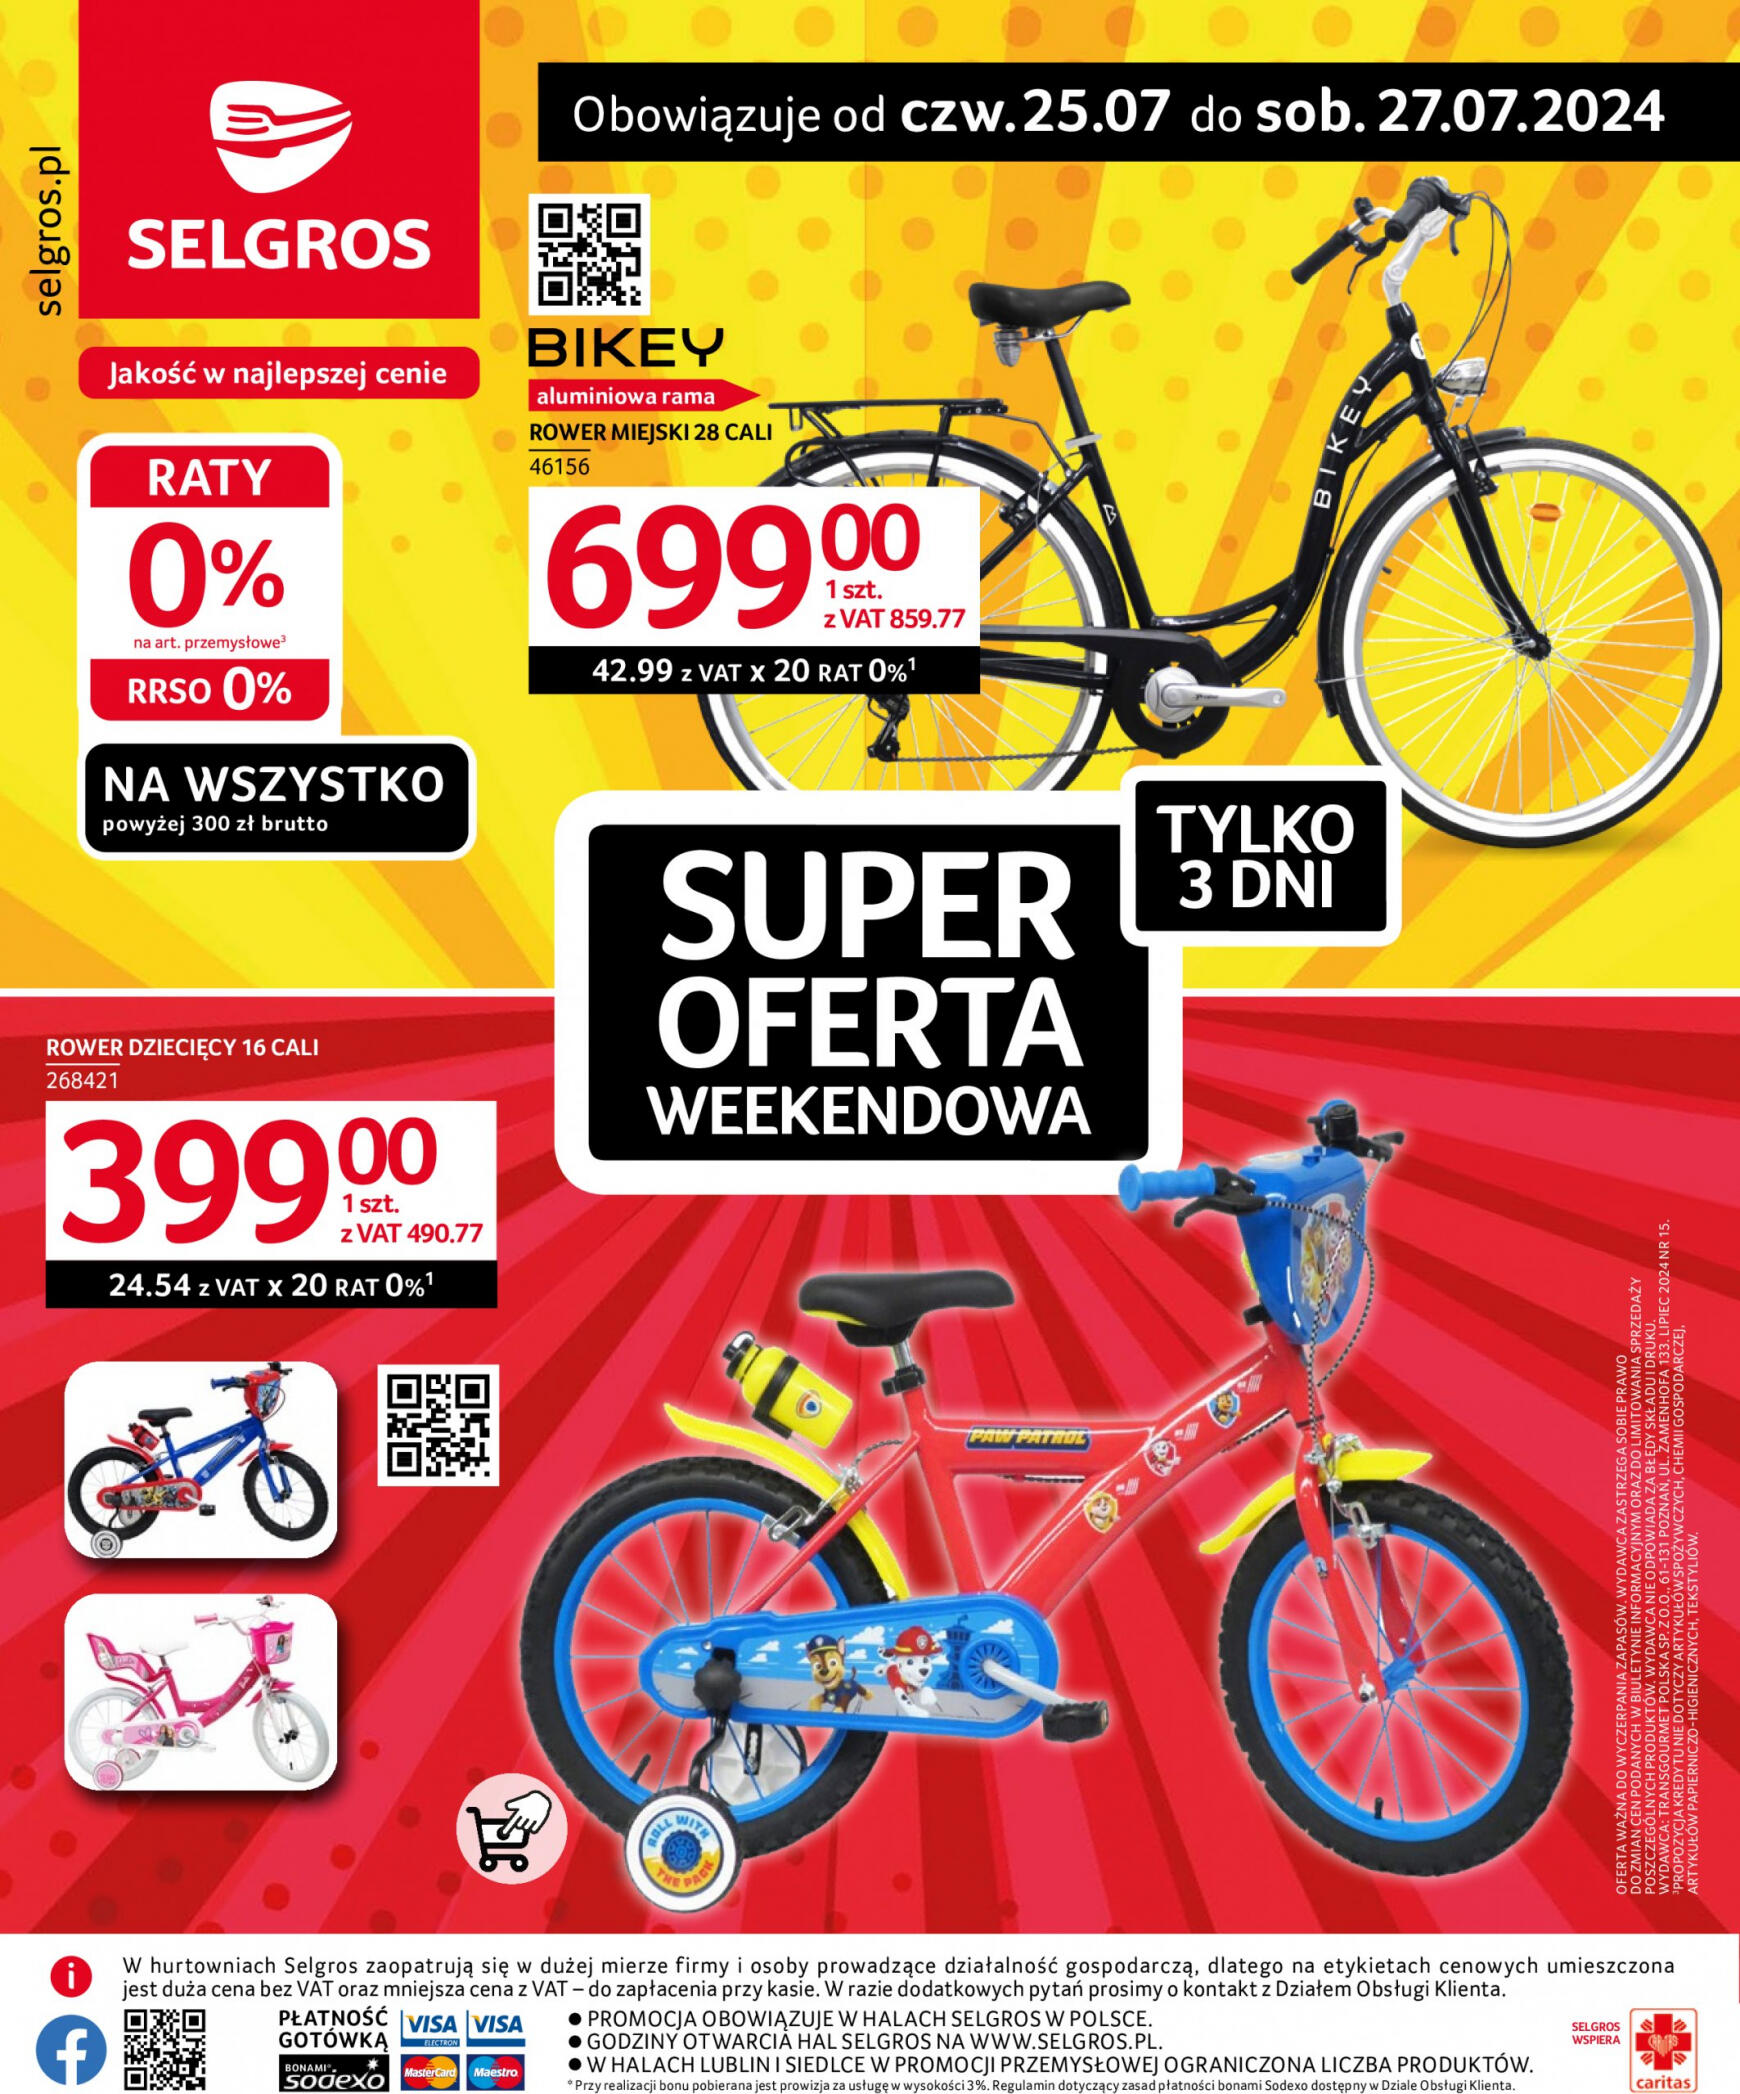 selgros - Selgros cash&carry - Super Oferta Weekendowa gazetka aktualna ważna od 25.07. - 27.07.